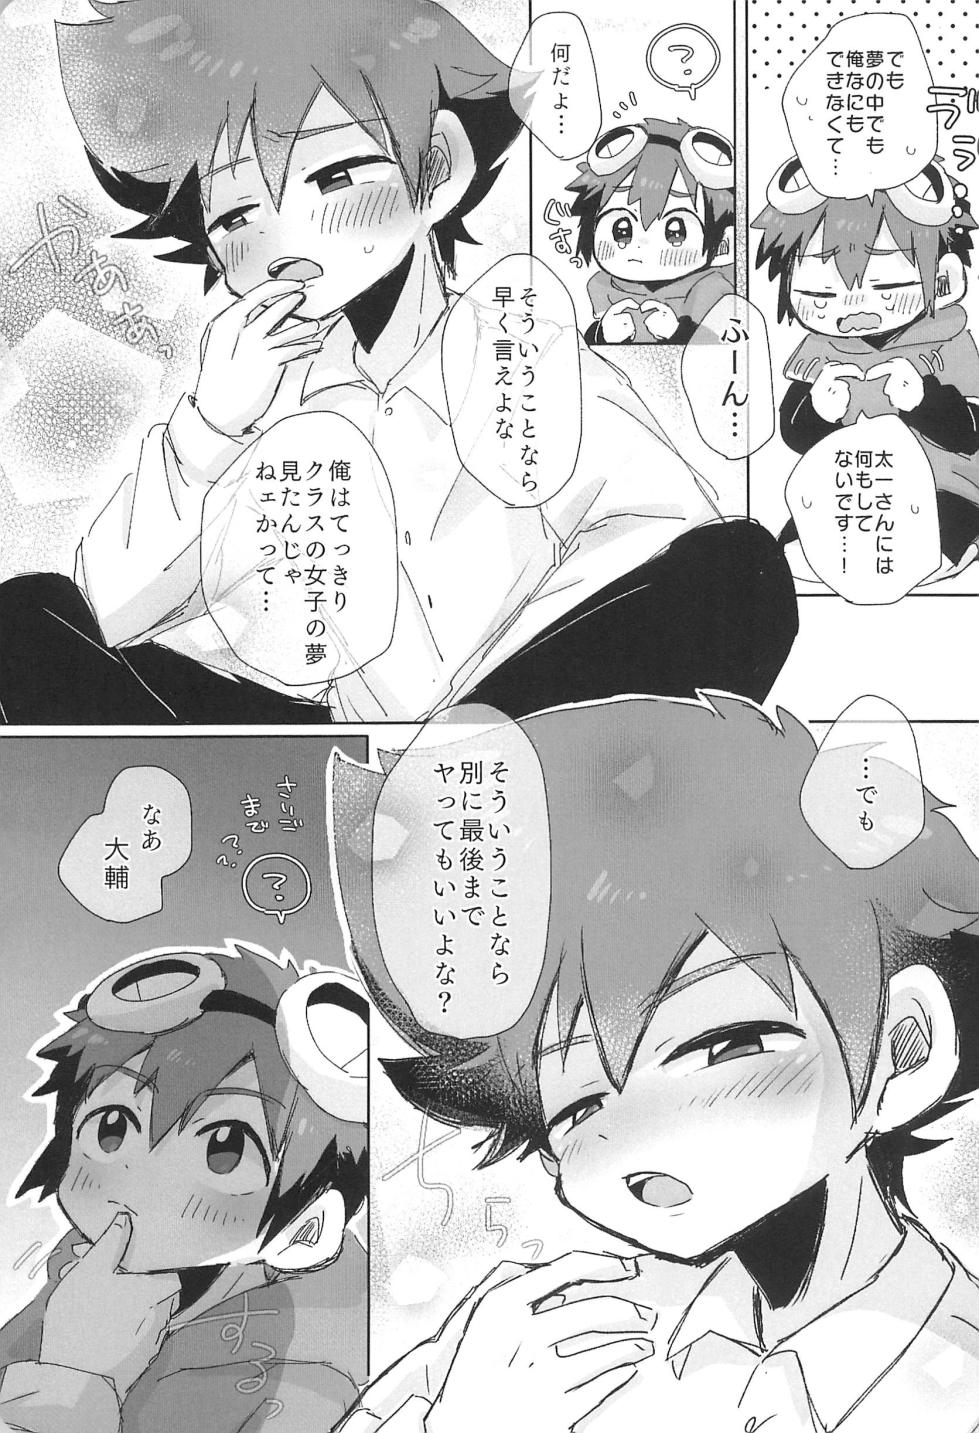 [＠szkn (Suzuki Sukyana)] Re:Re: (Digimon Adventure) - Page 17